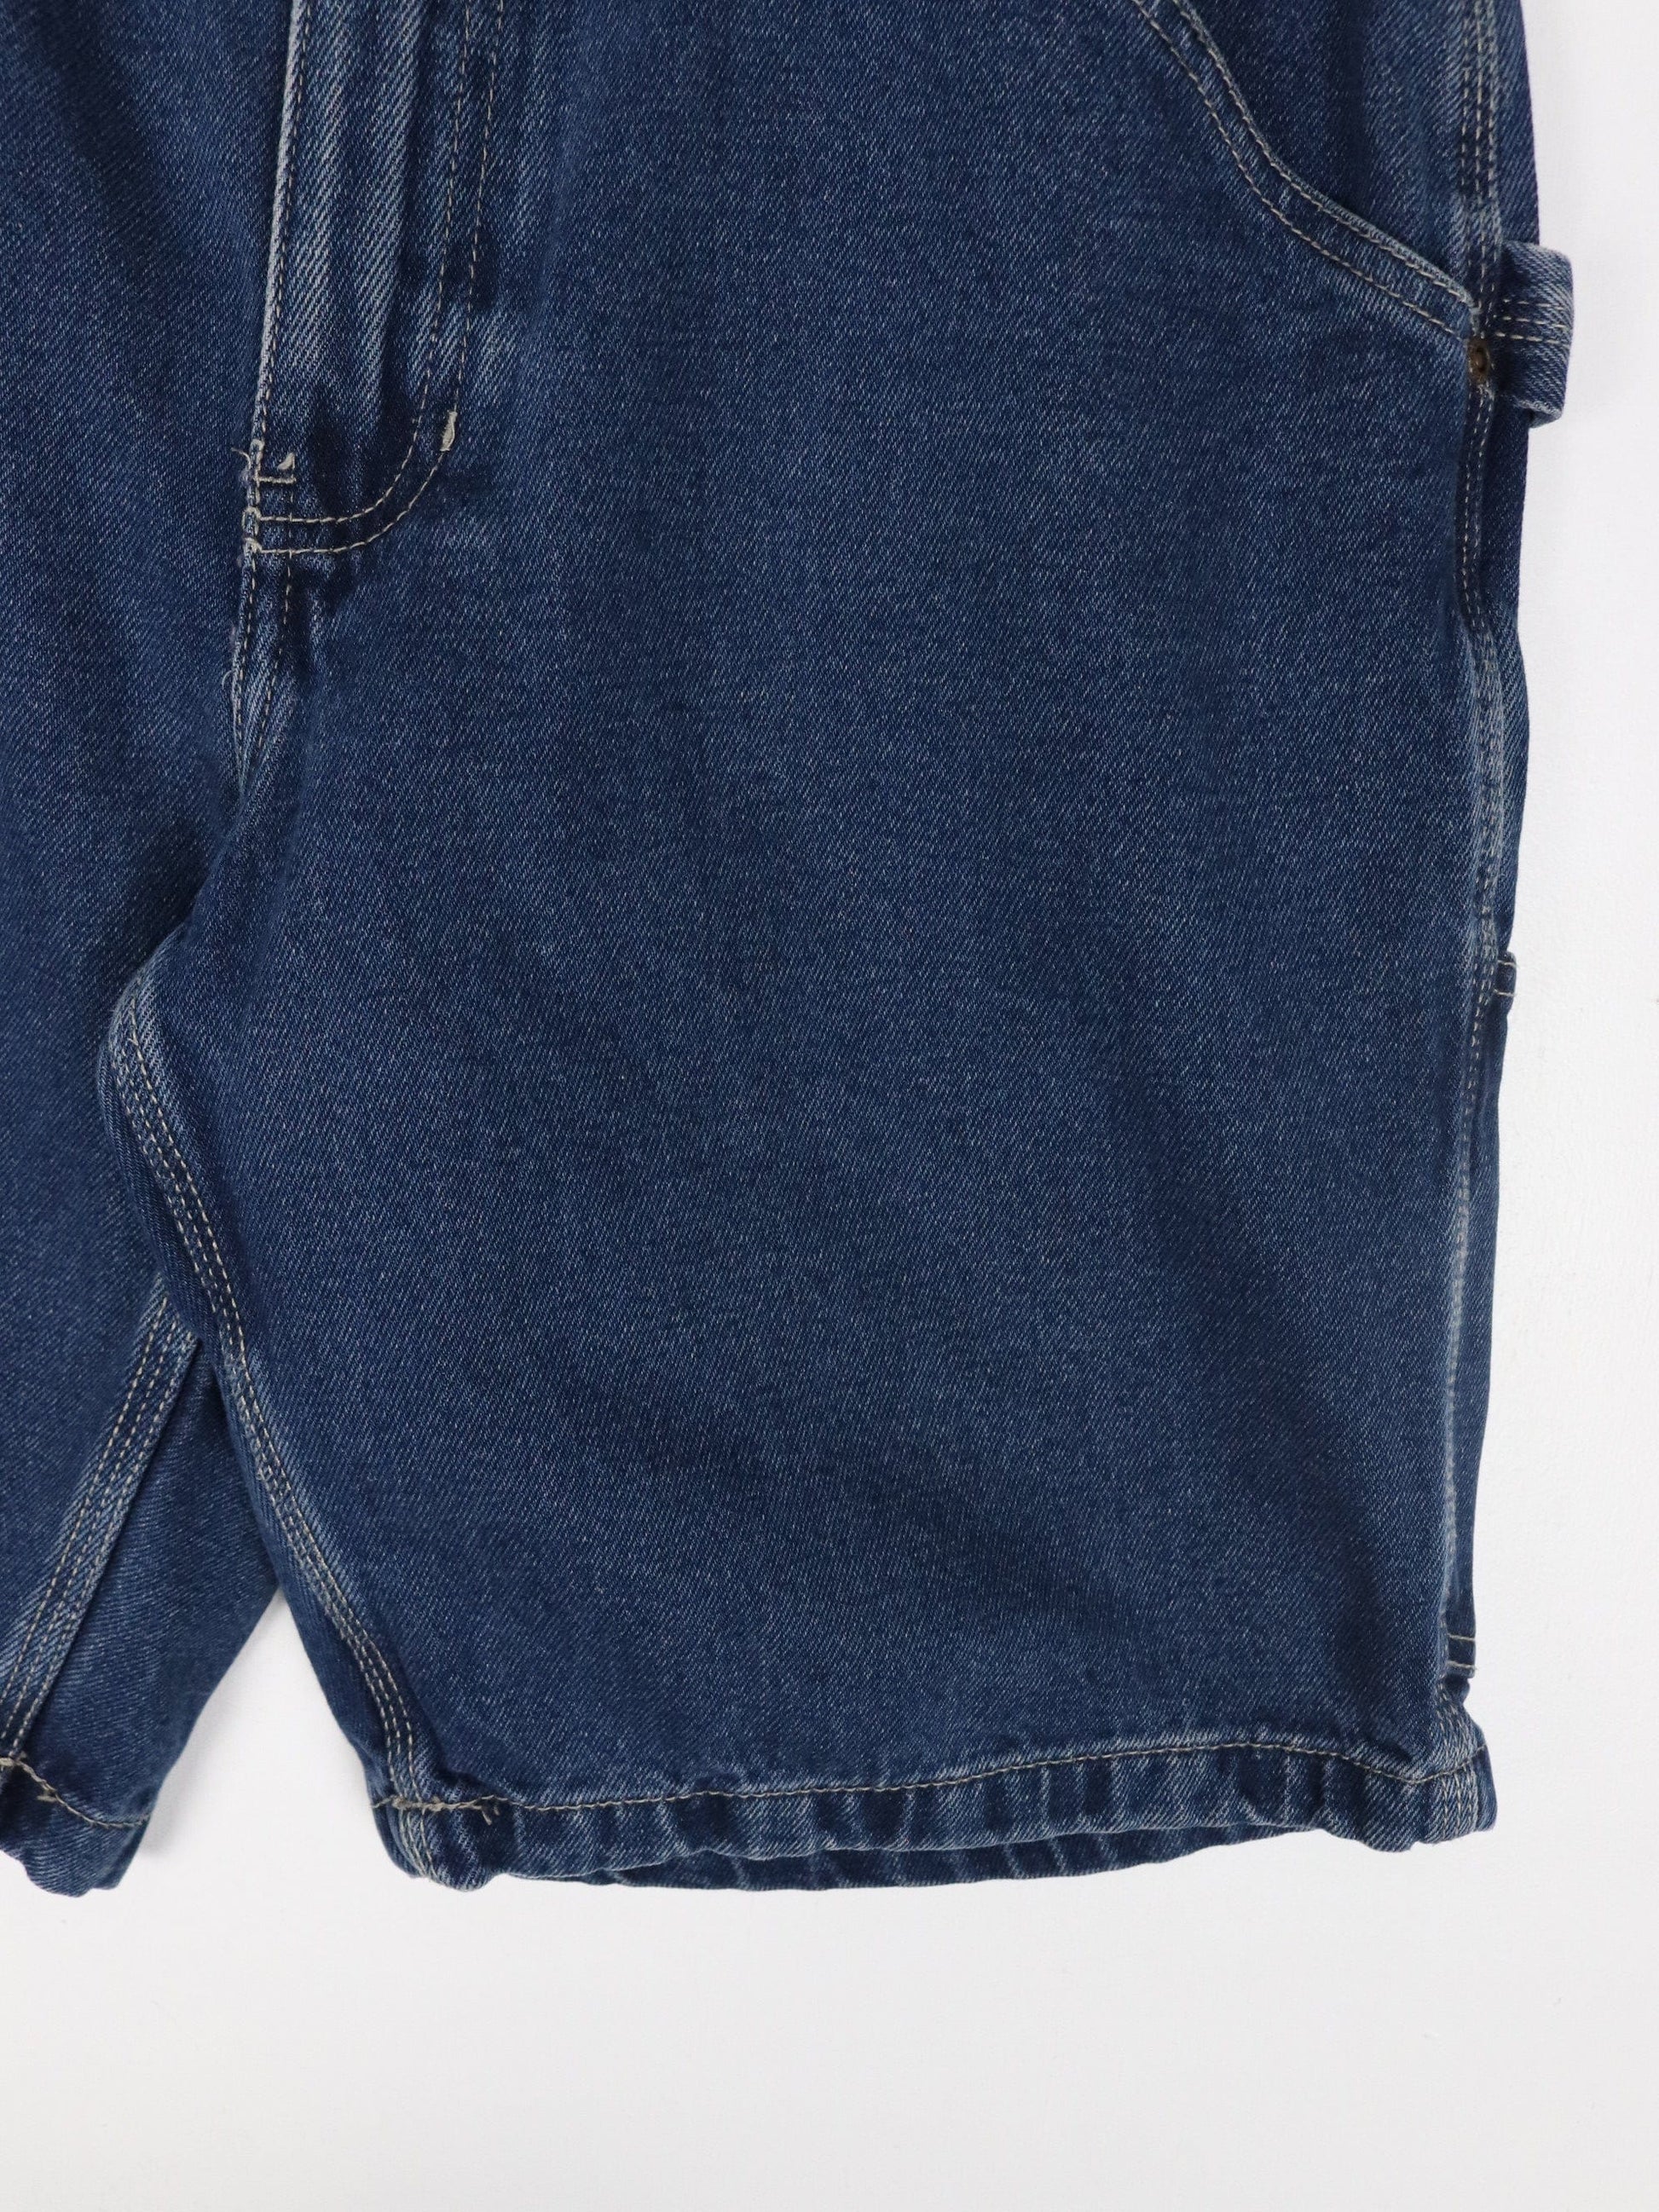 Other Shorts Vintage Route 66 Shorts Fits Mens 31 Blue Denim Jorts